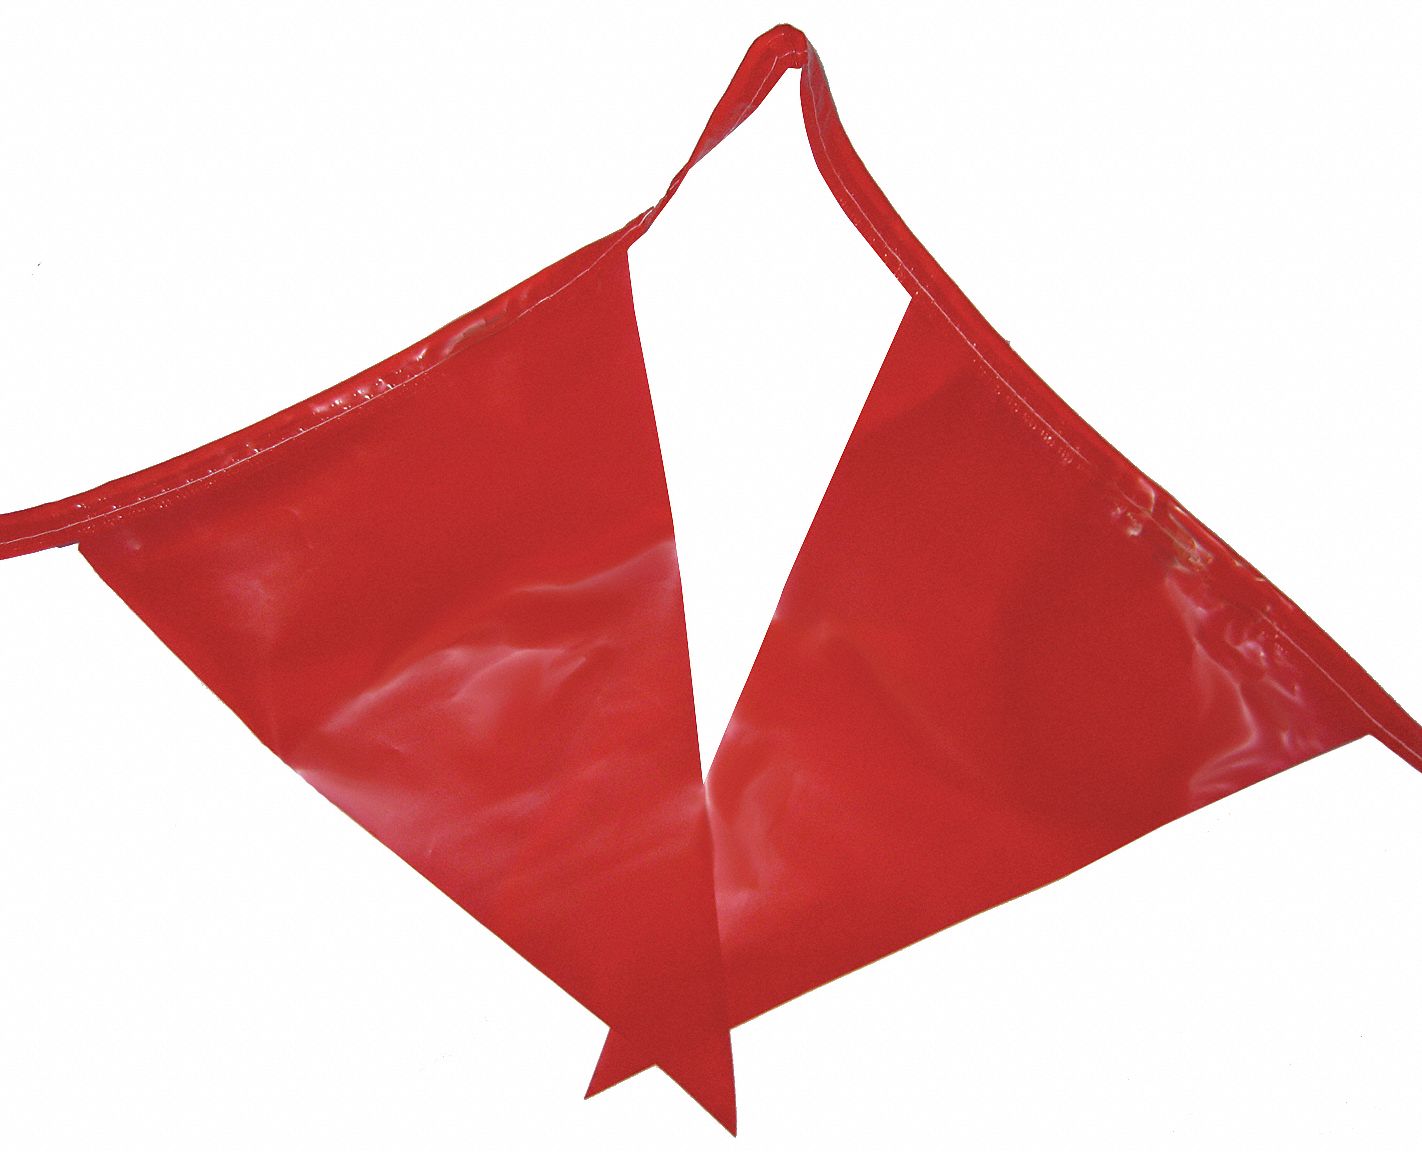 9WM99 - Pennants Polyethylene Red 100 ft.